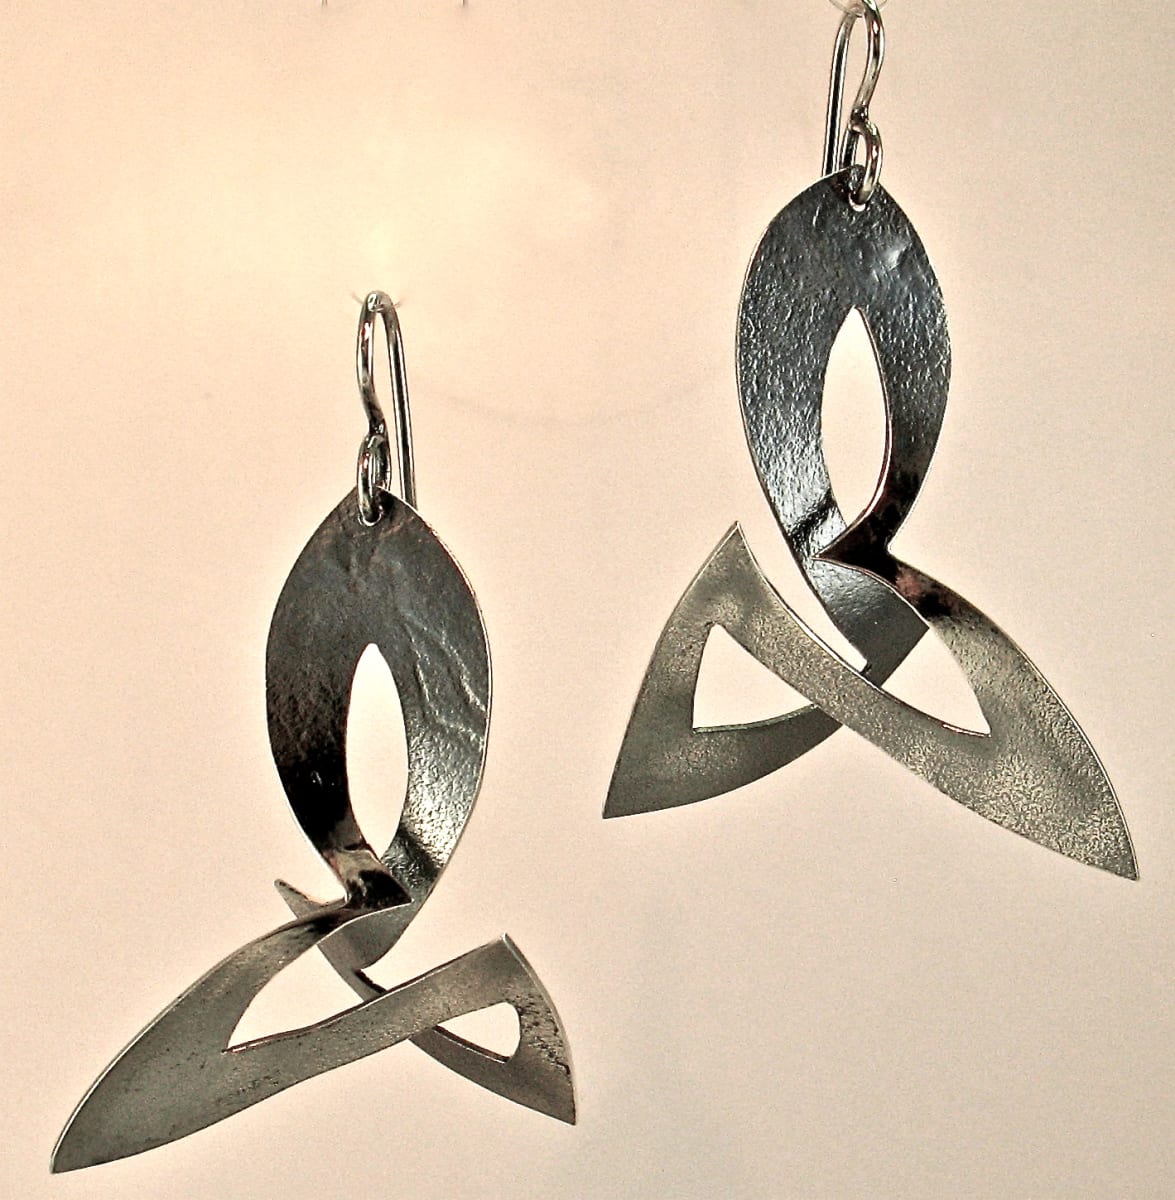 Drop Earrings by Lee Eastman  Image: Statement earrings